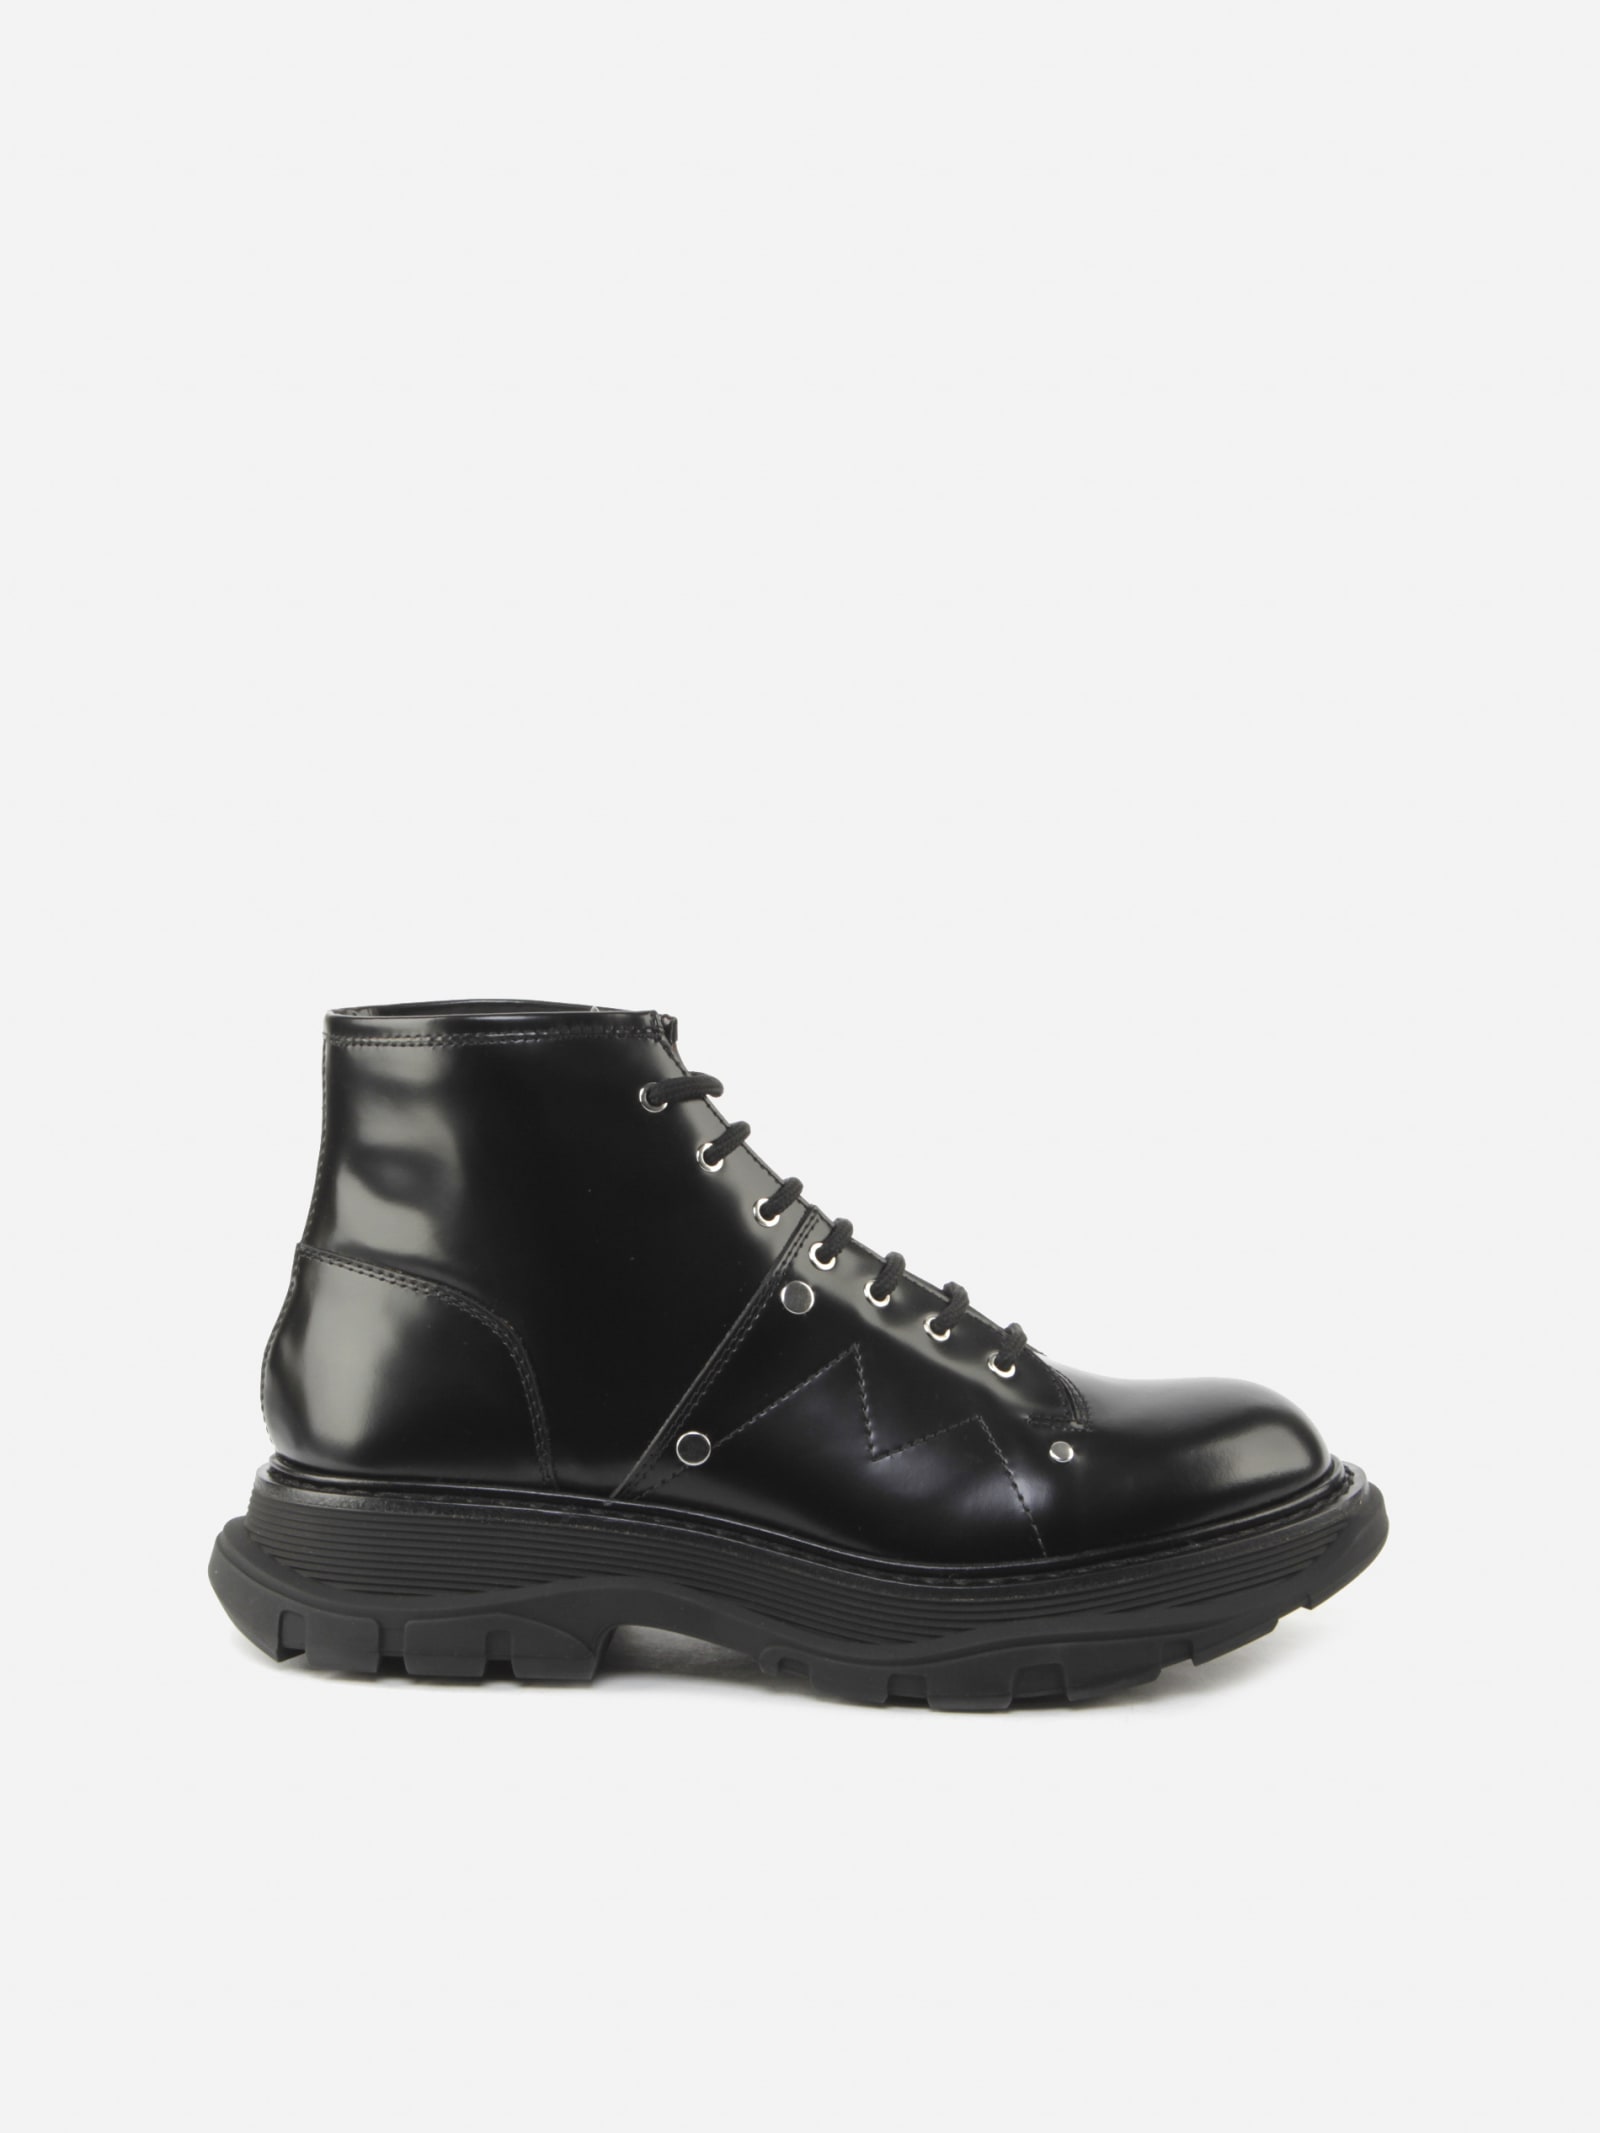 Alexander McQueen Shiny Black Calfskin Ankle Boots